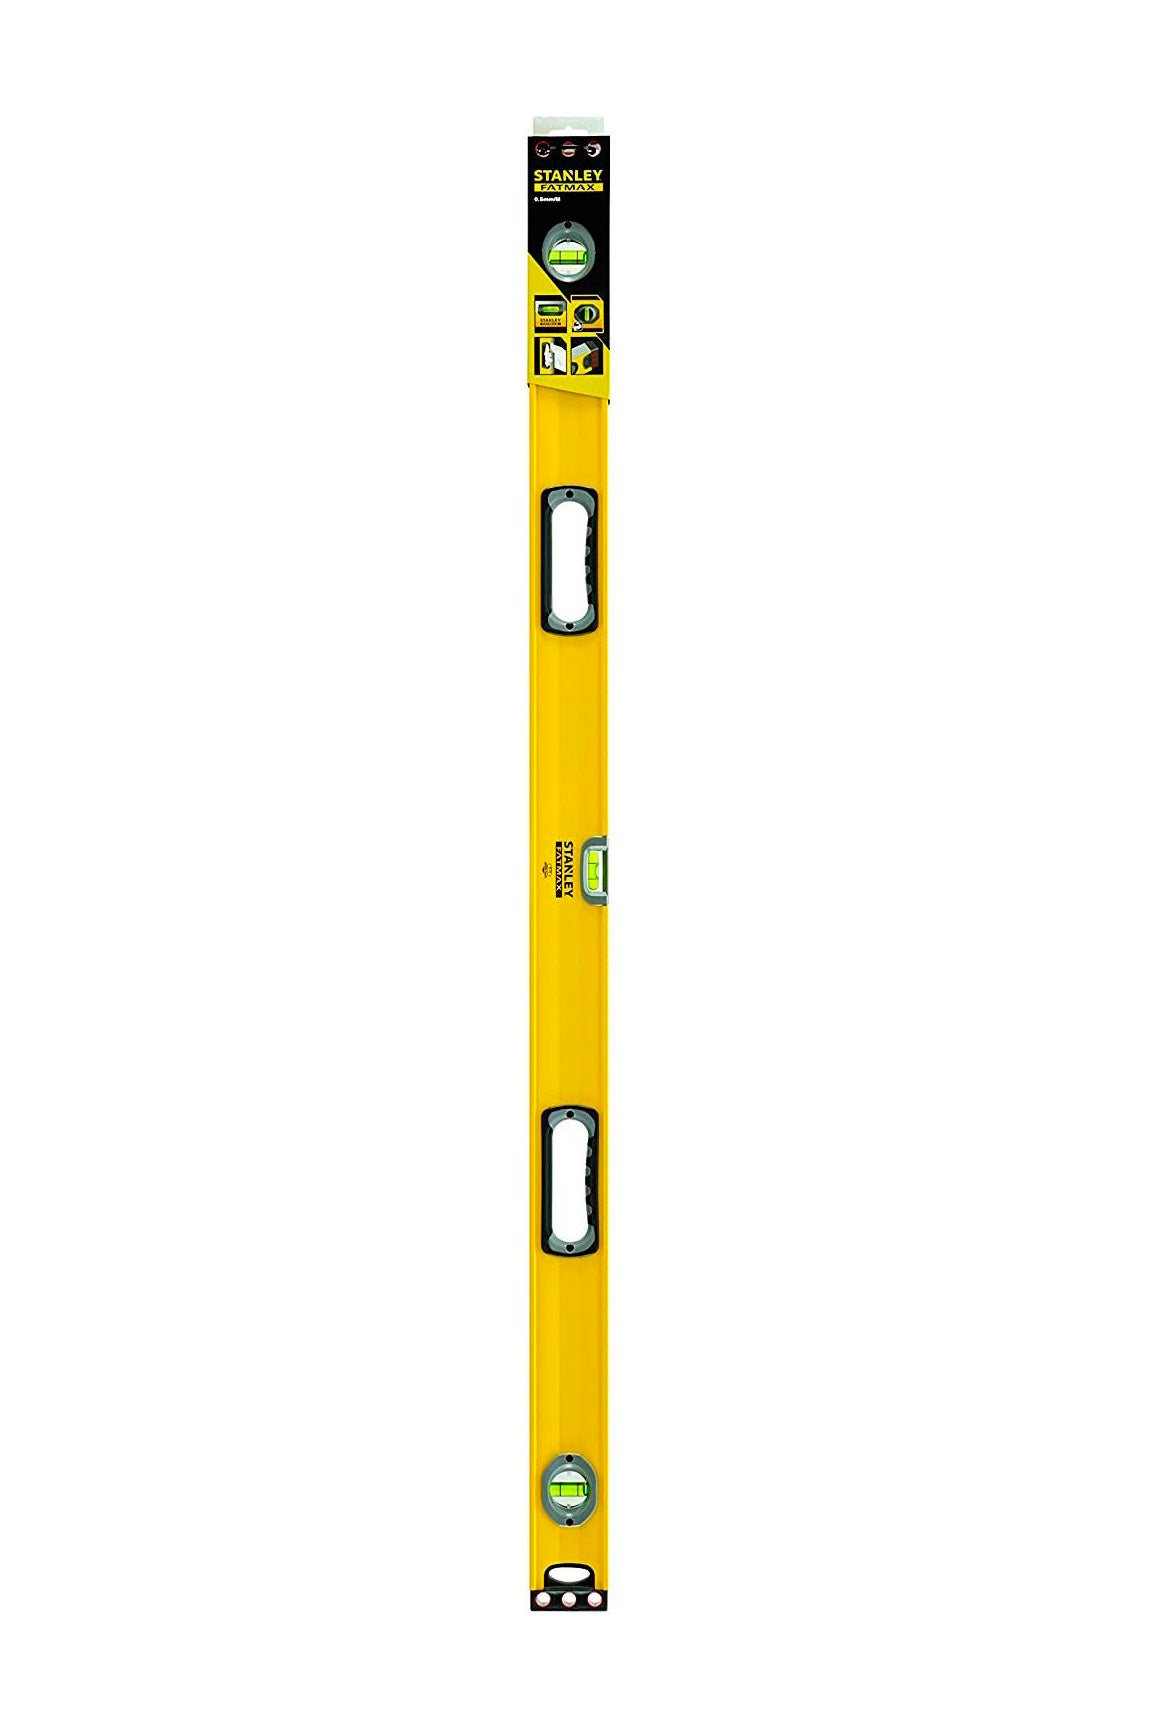 Nivel Tubular FatMax II 120cm Stanley 1-43-548